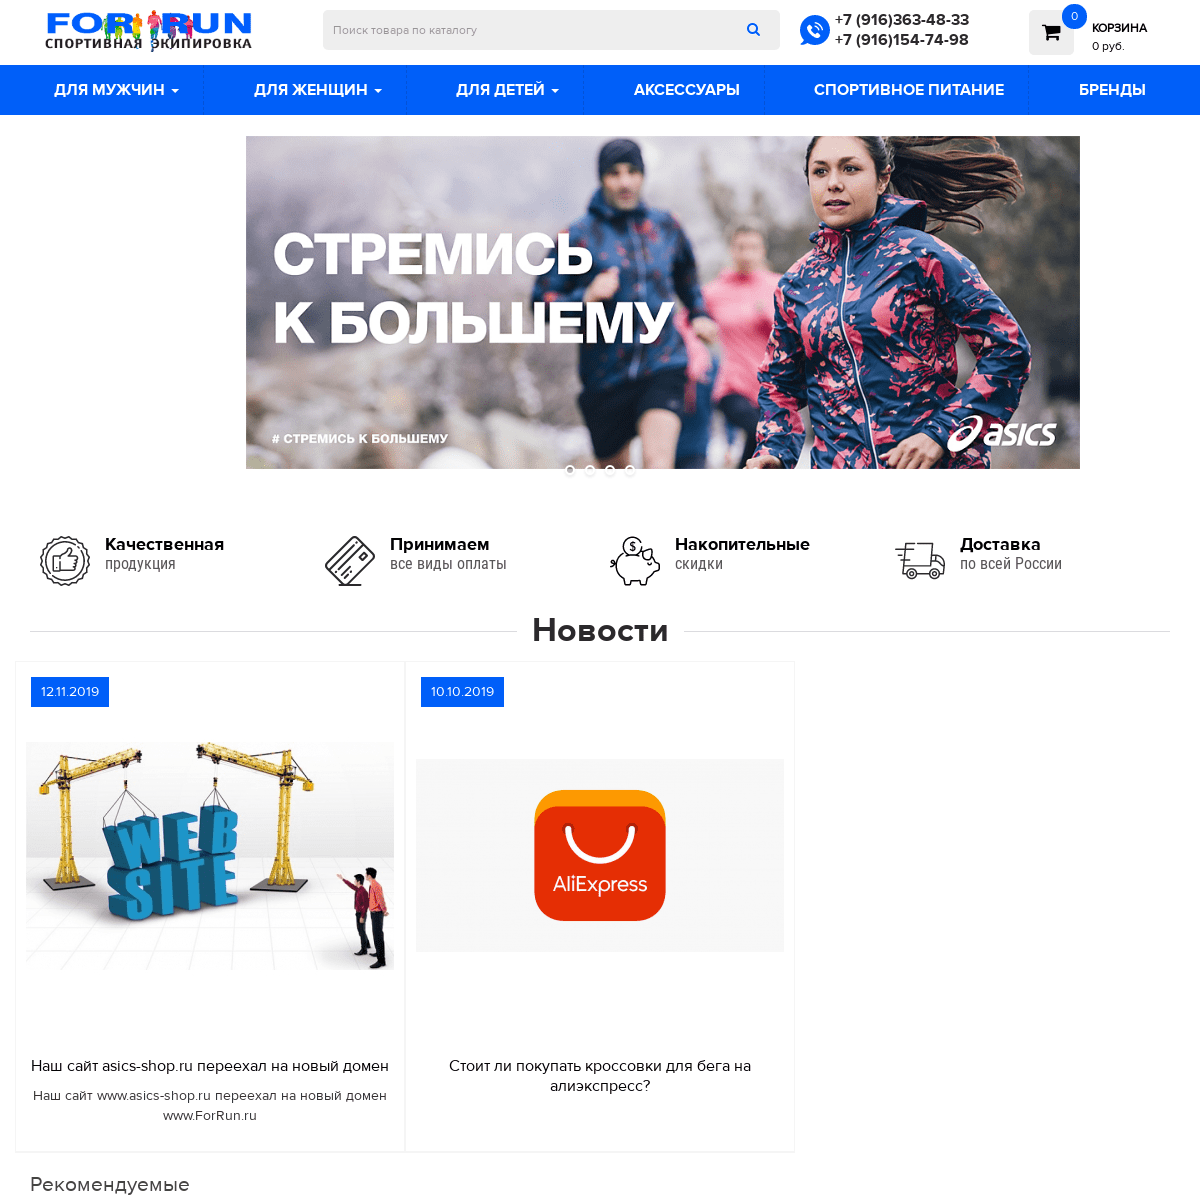 A complete backup of asics-shop.ru